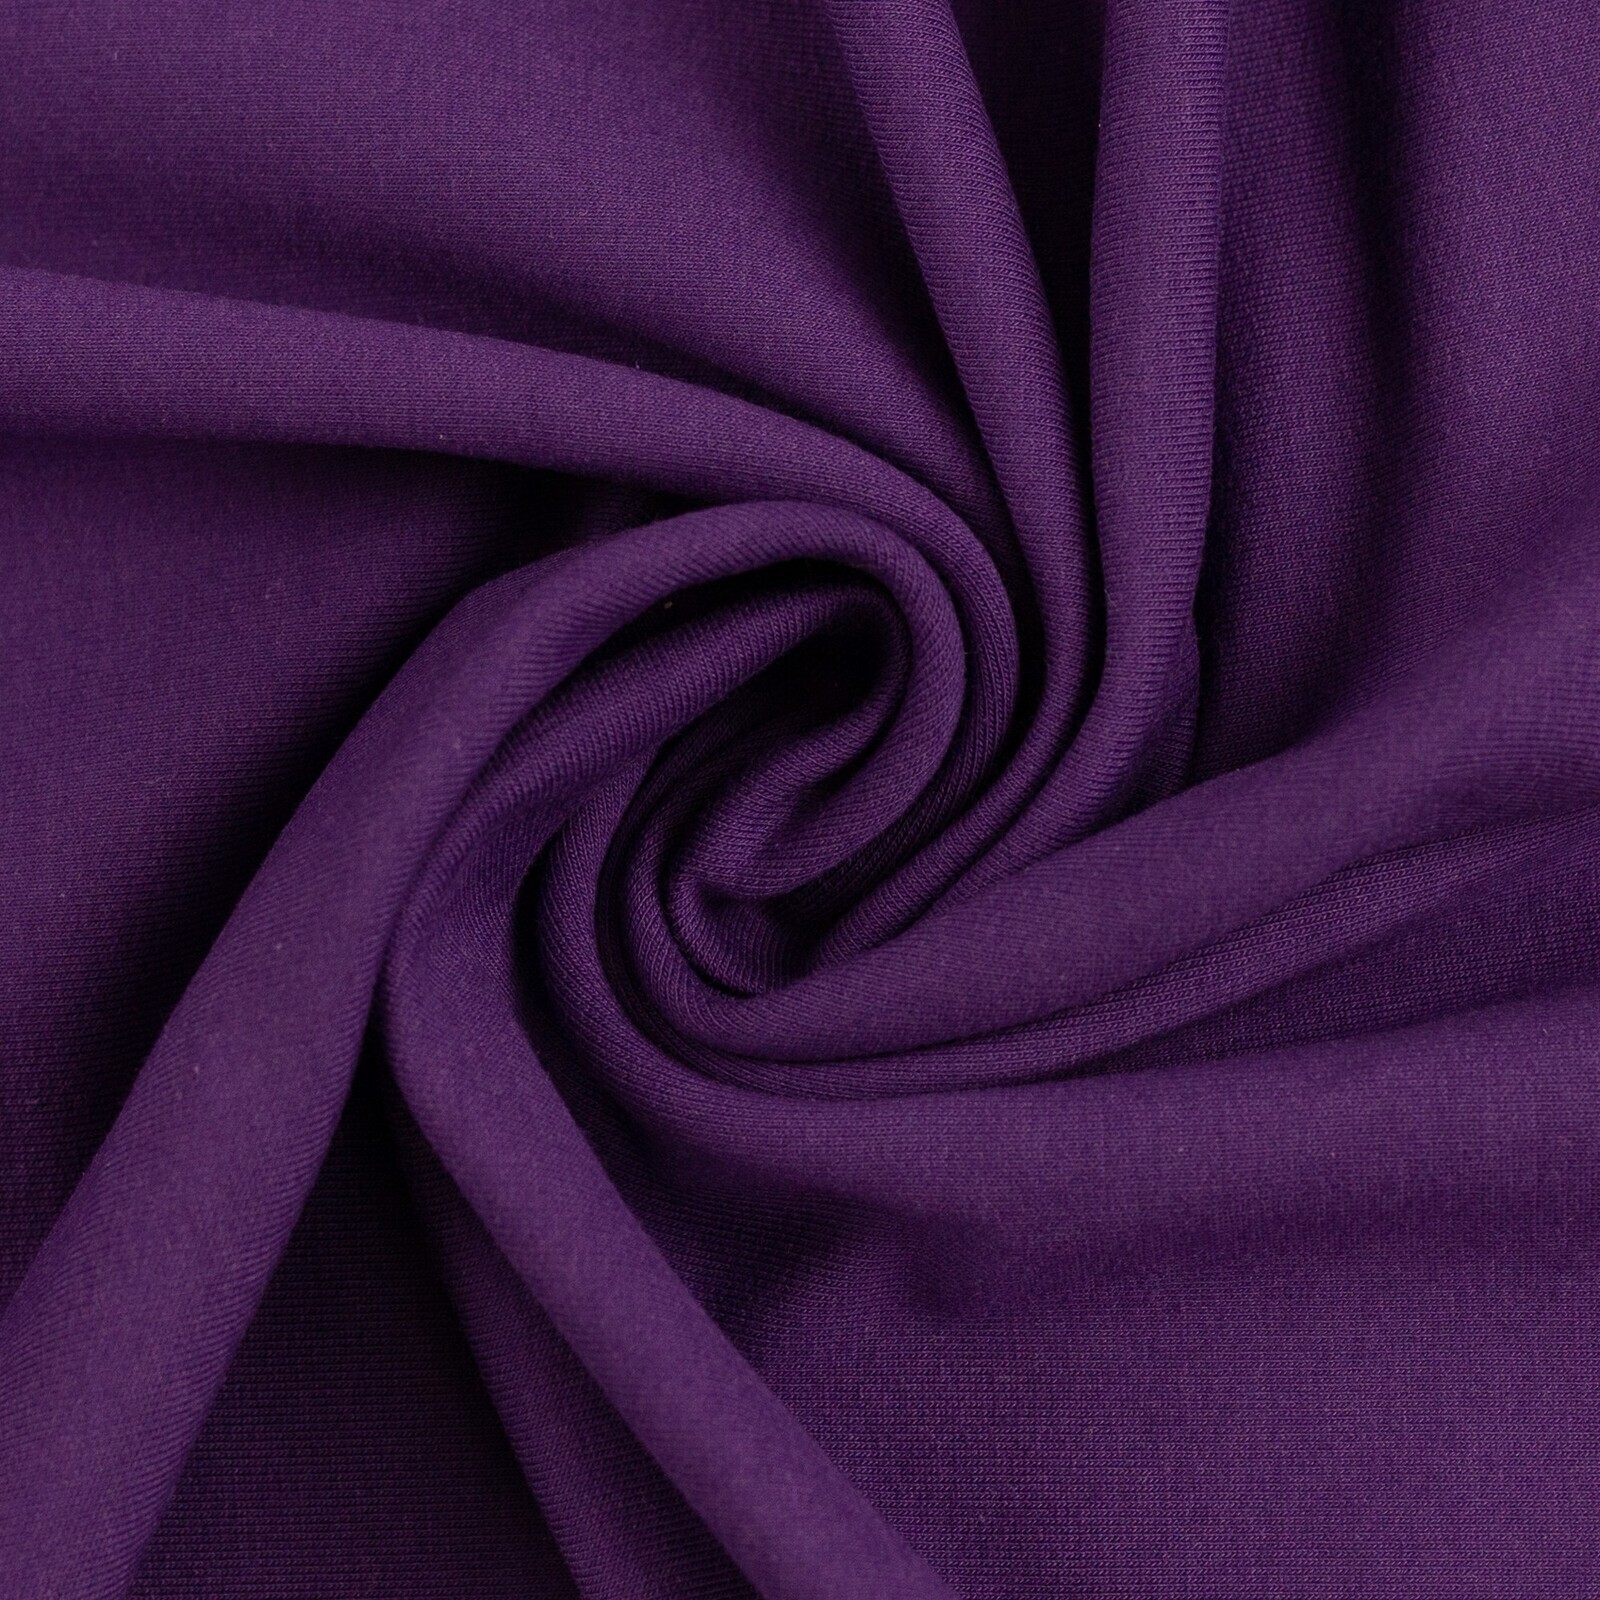 European Cotton Elastane Lycra Jersey, Solid Purple Oeko-tex Knit Fabric